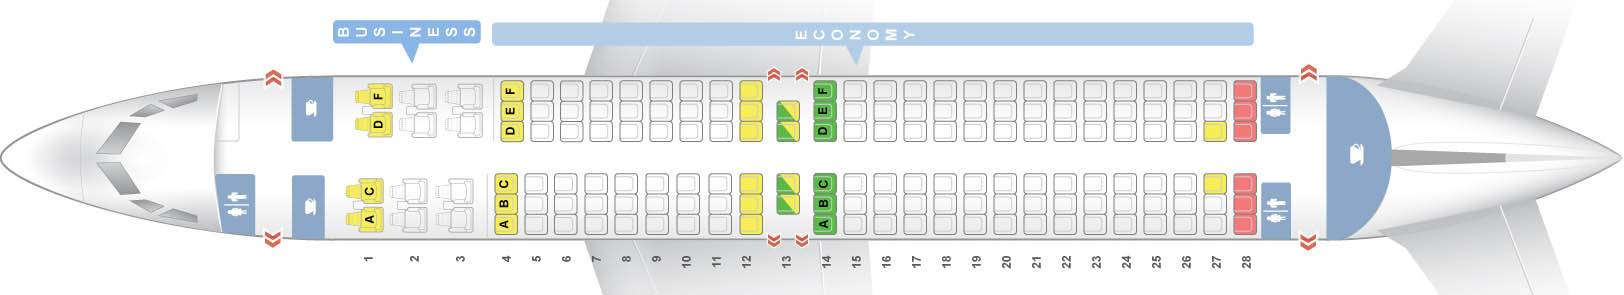 Airbus a320 s7 airlines: лучшие места и схема салона